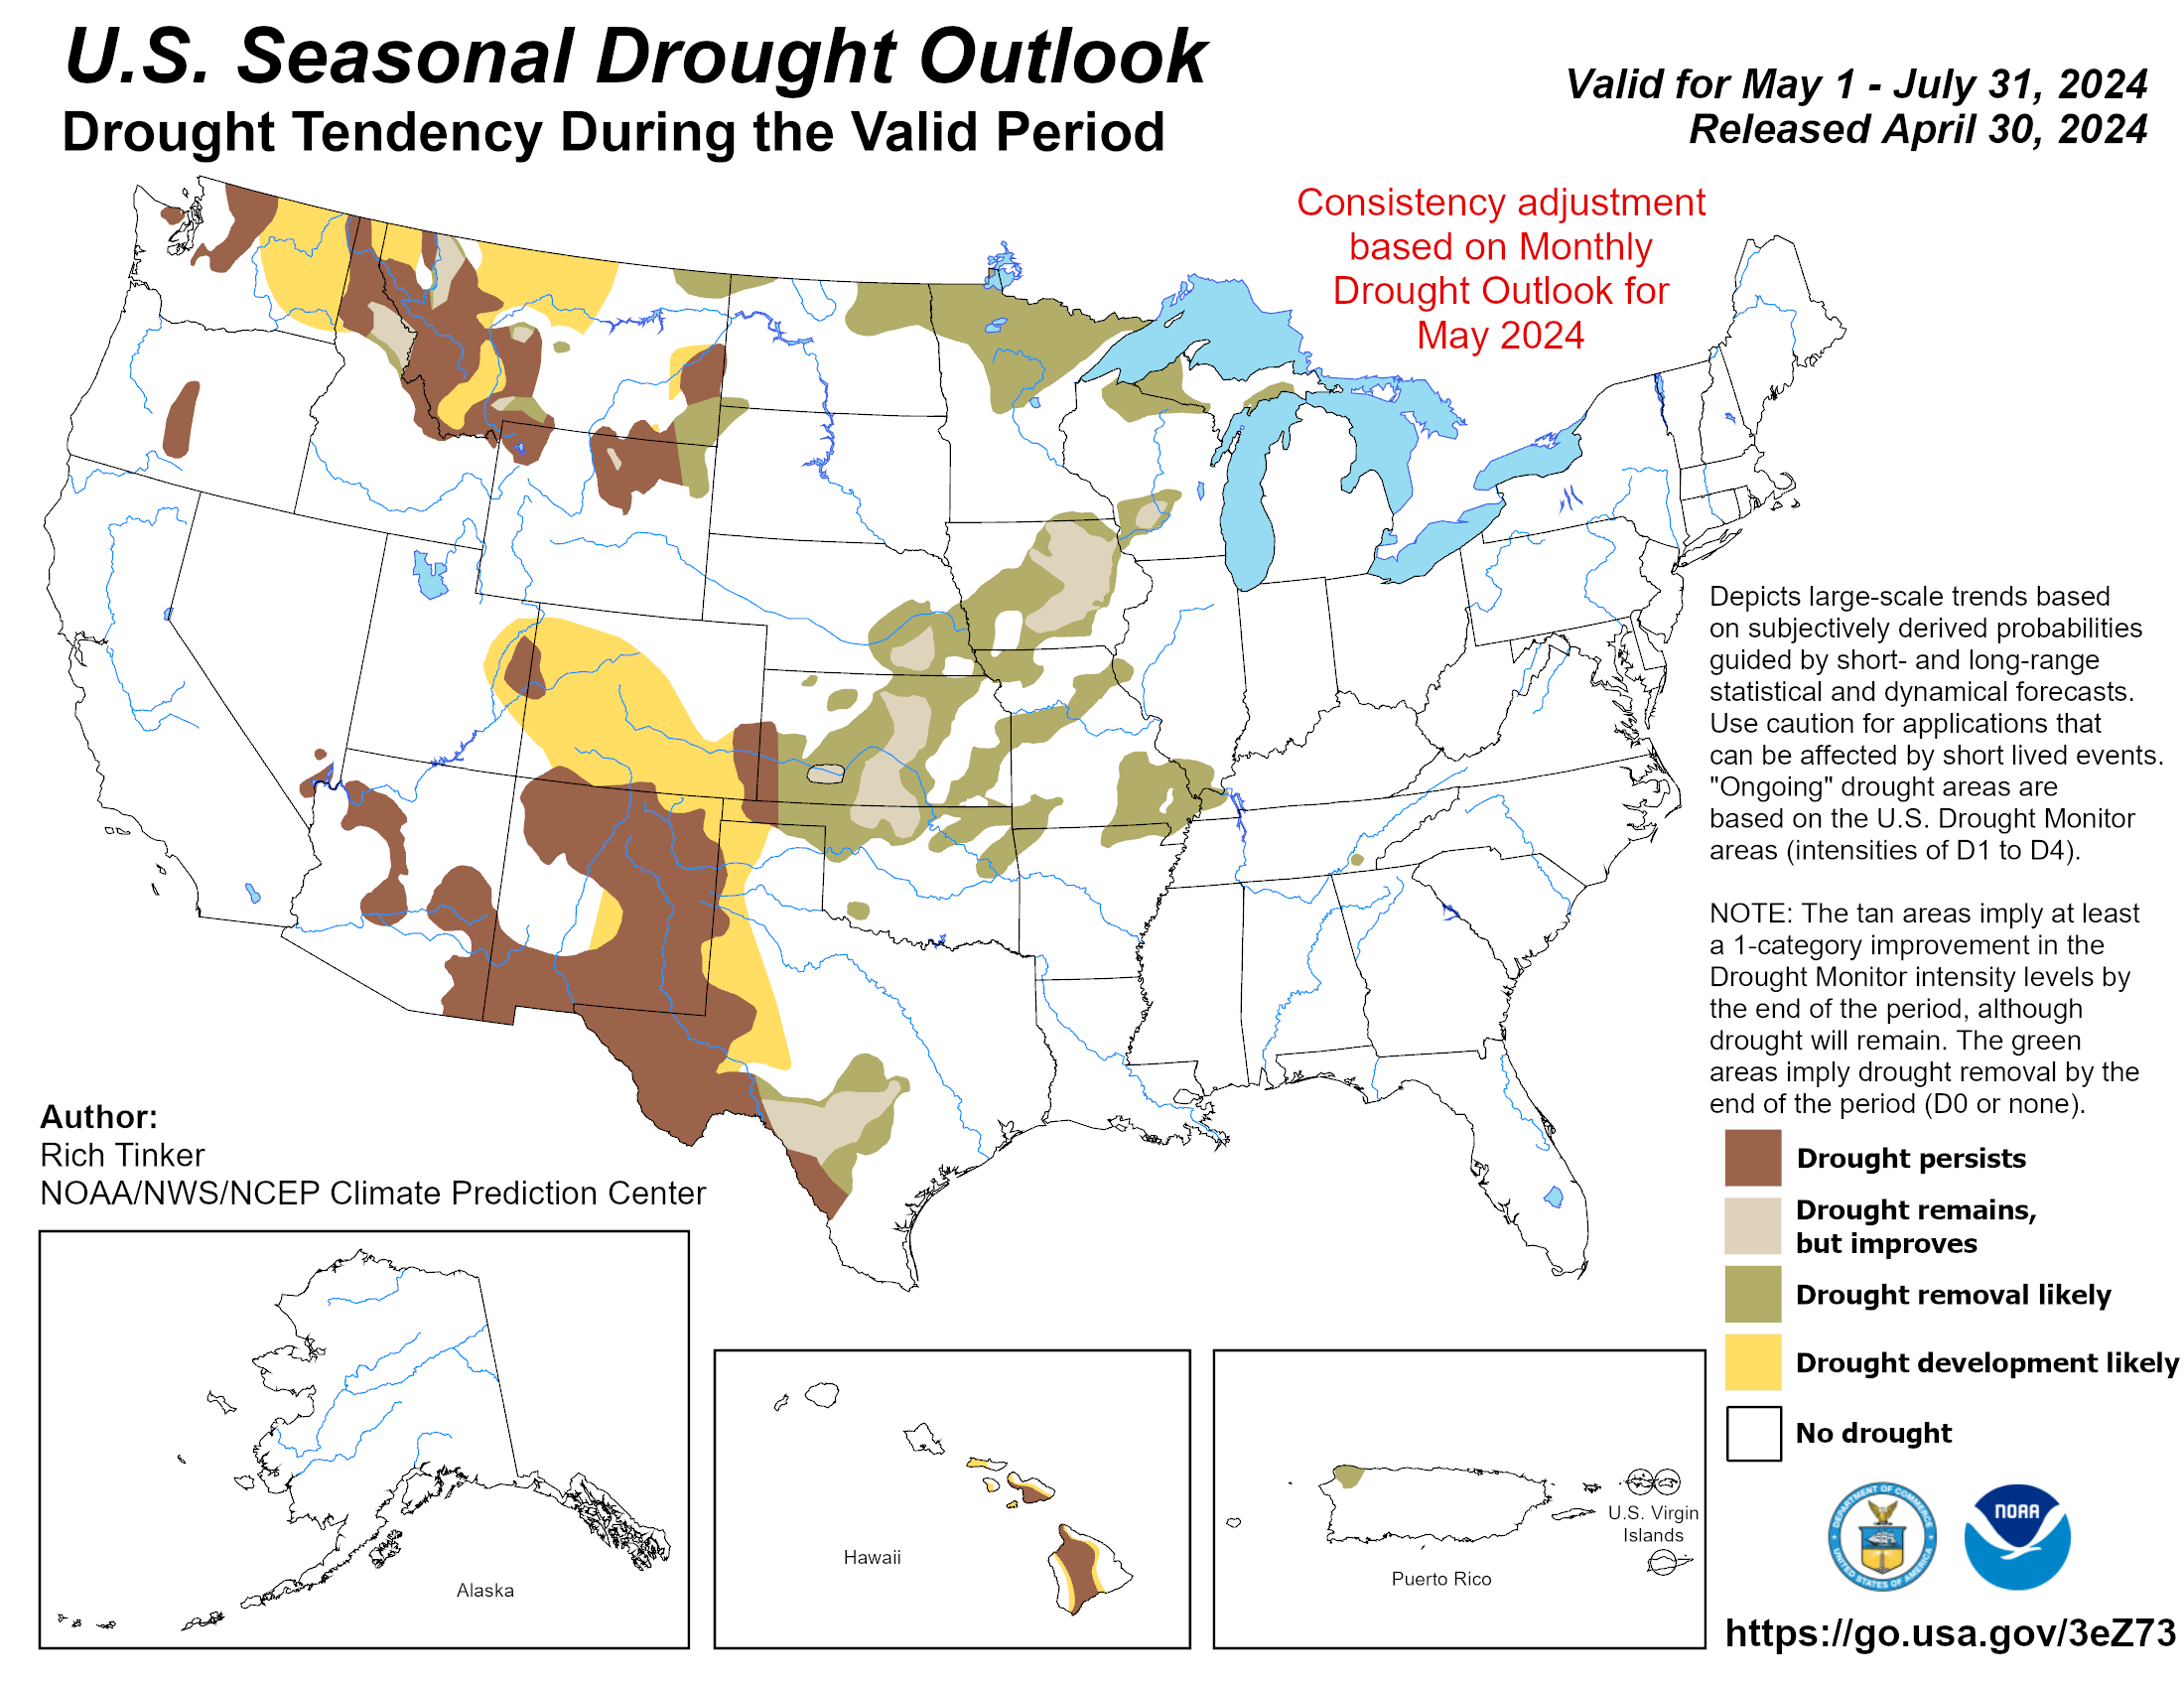 U.S. Drought Seasonal Outlook